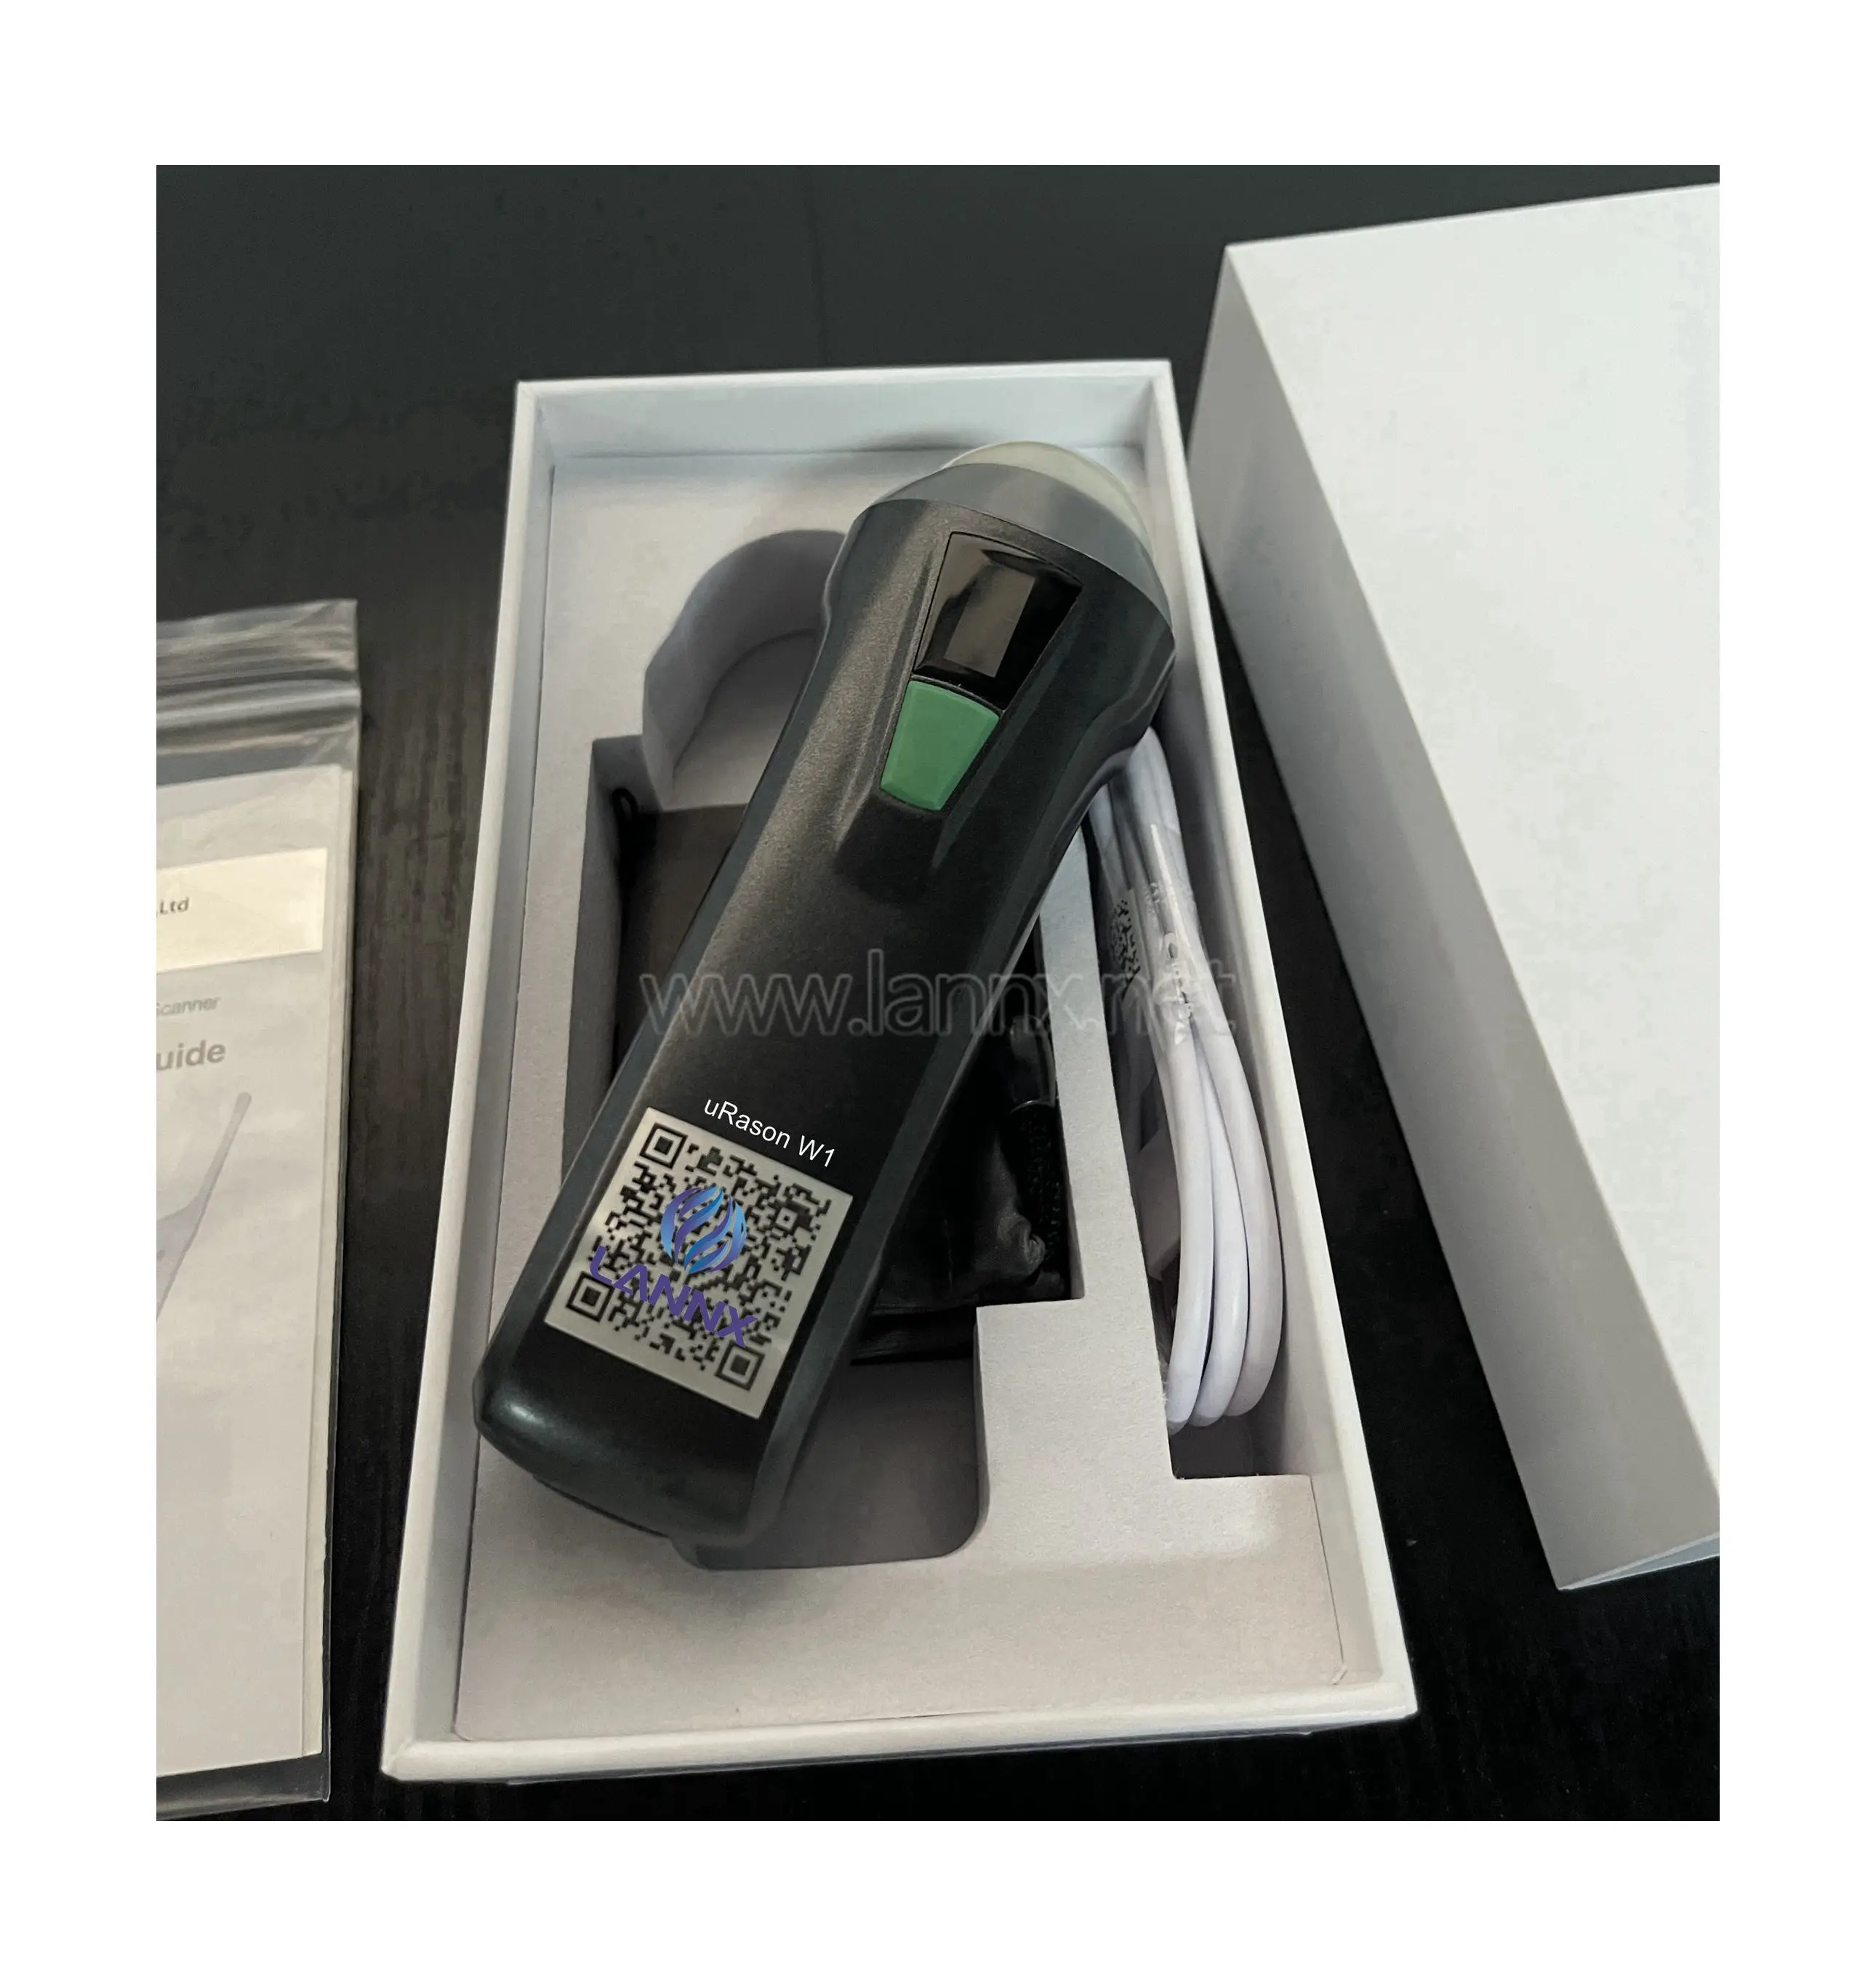 Digital Ultrasonic Diagnostic Imaging System Ultrasound Scanner ecografo  portatil M ultrasound Power Supply - AliExpress